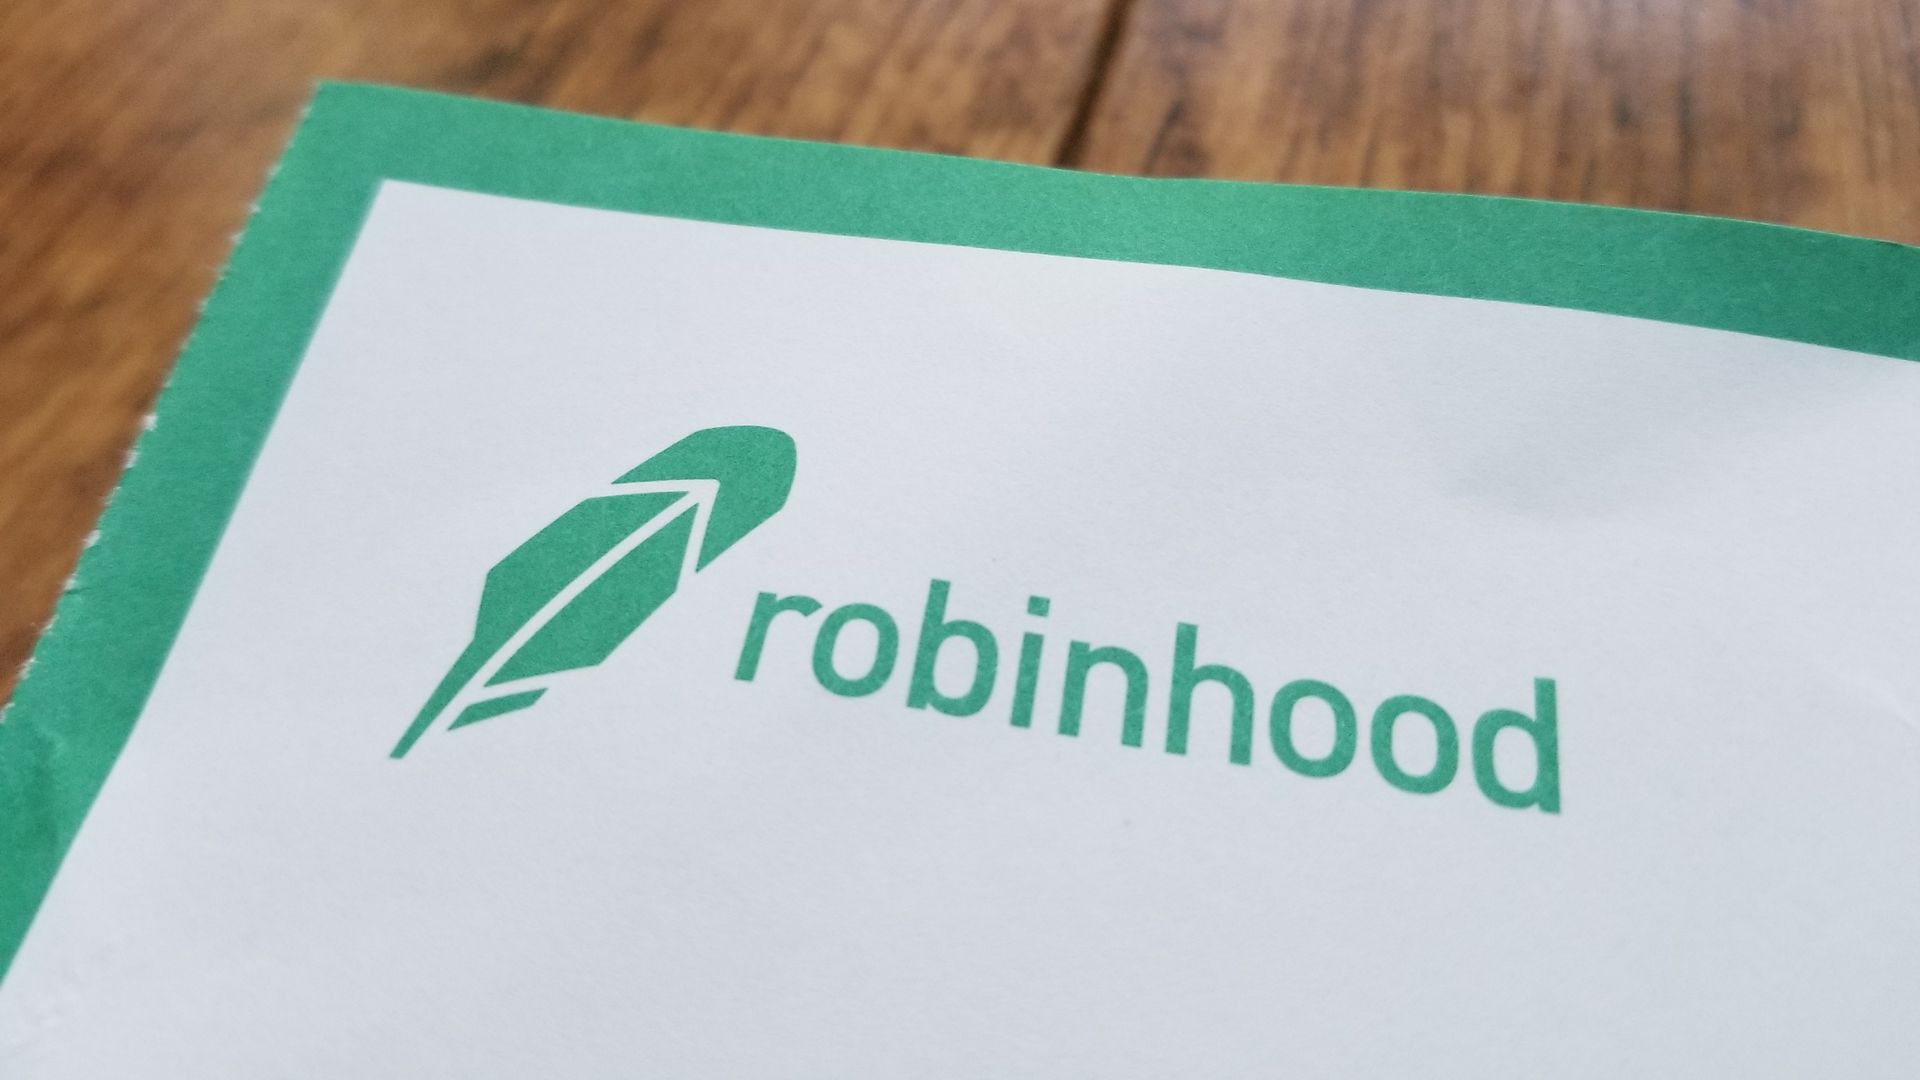 A close-up of Robinhood's logo